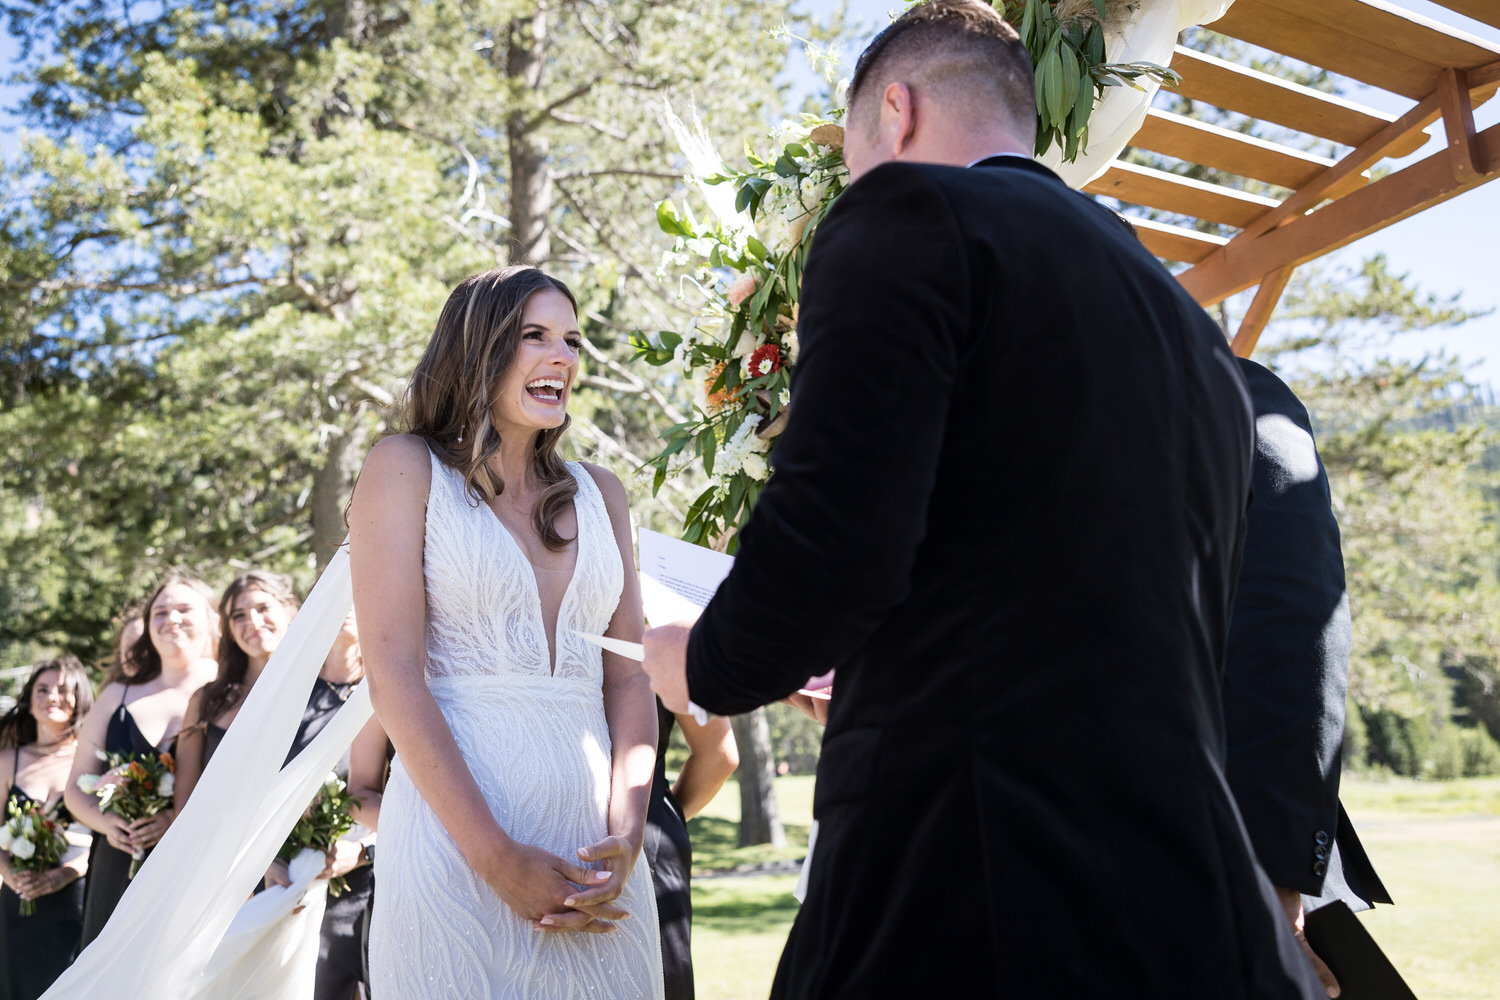 A joyful exchange of vows under a simple wooden arch at an Everline Resort wedding.